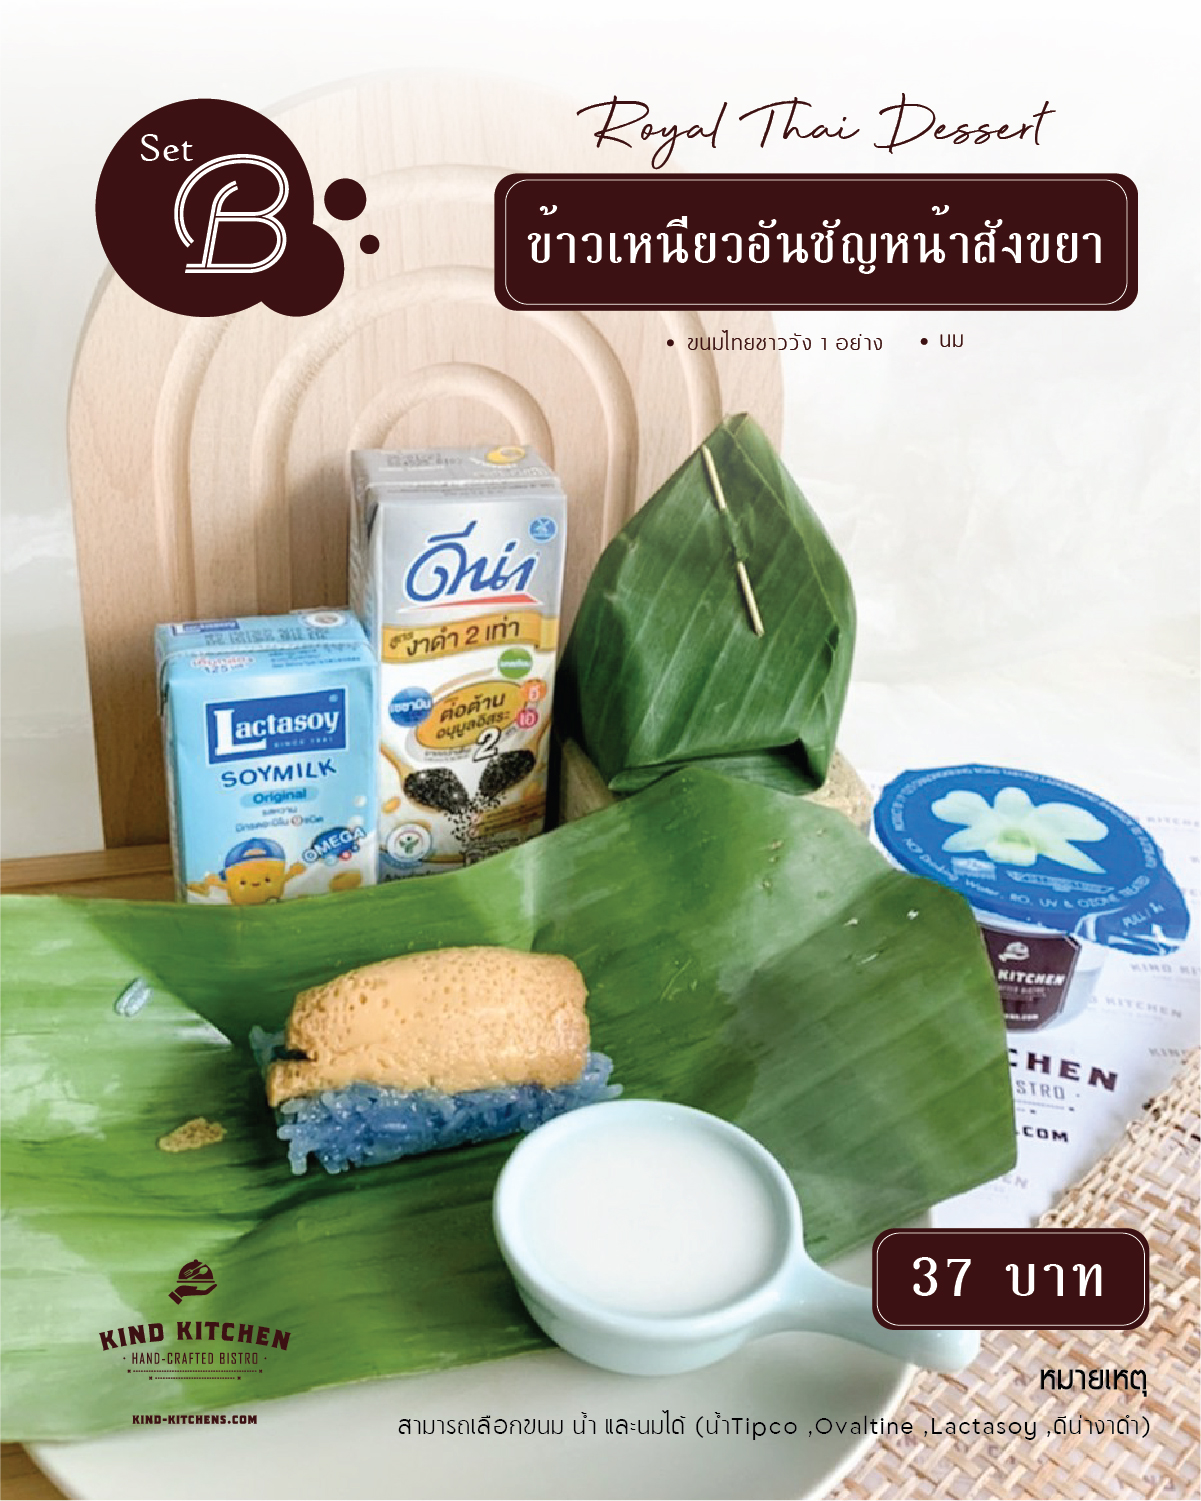 Royal Thai Dessert ข้าวเหนียวมูนอันชัญหน้าสังขยา พร้อมน้ำ นม(เลือกได้) Set B